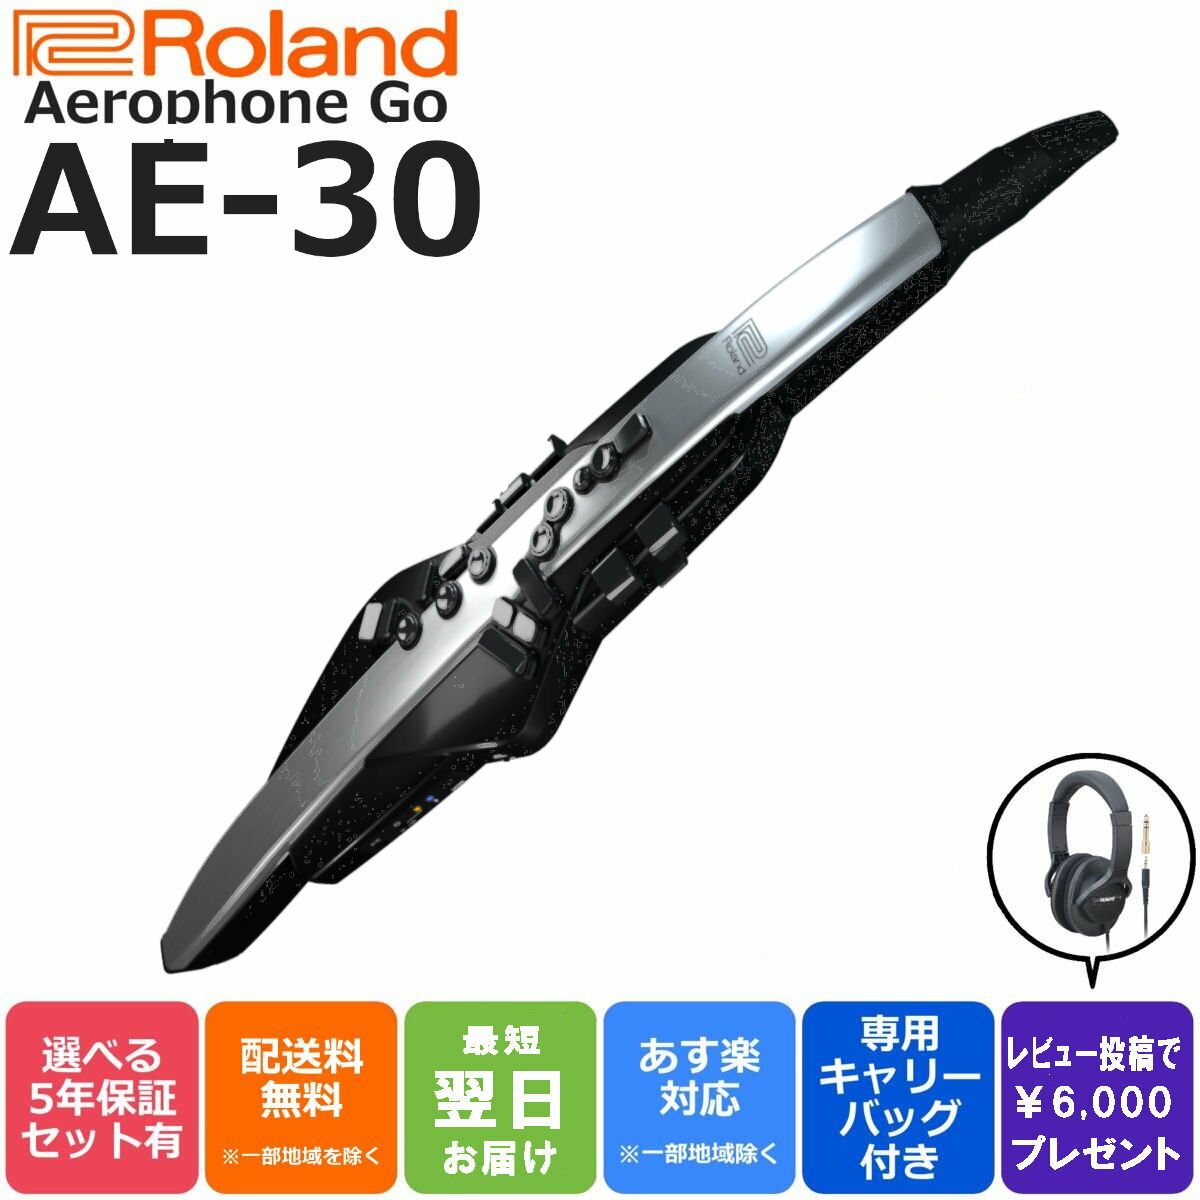 Roland ローランド Digital Wind Instrument デジタル管楽器 専用キャリングバッグ付き Aerophone Pro エアロフォン プロ AE-30